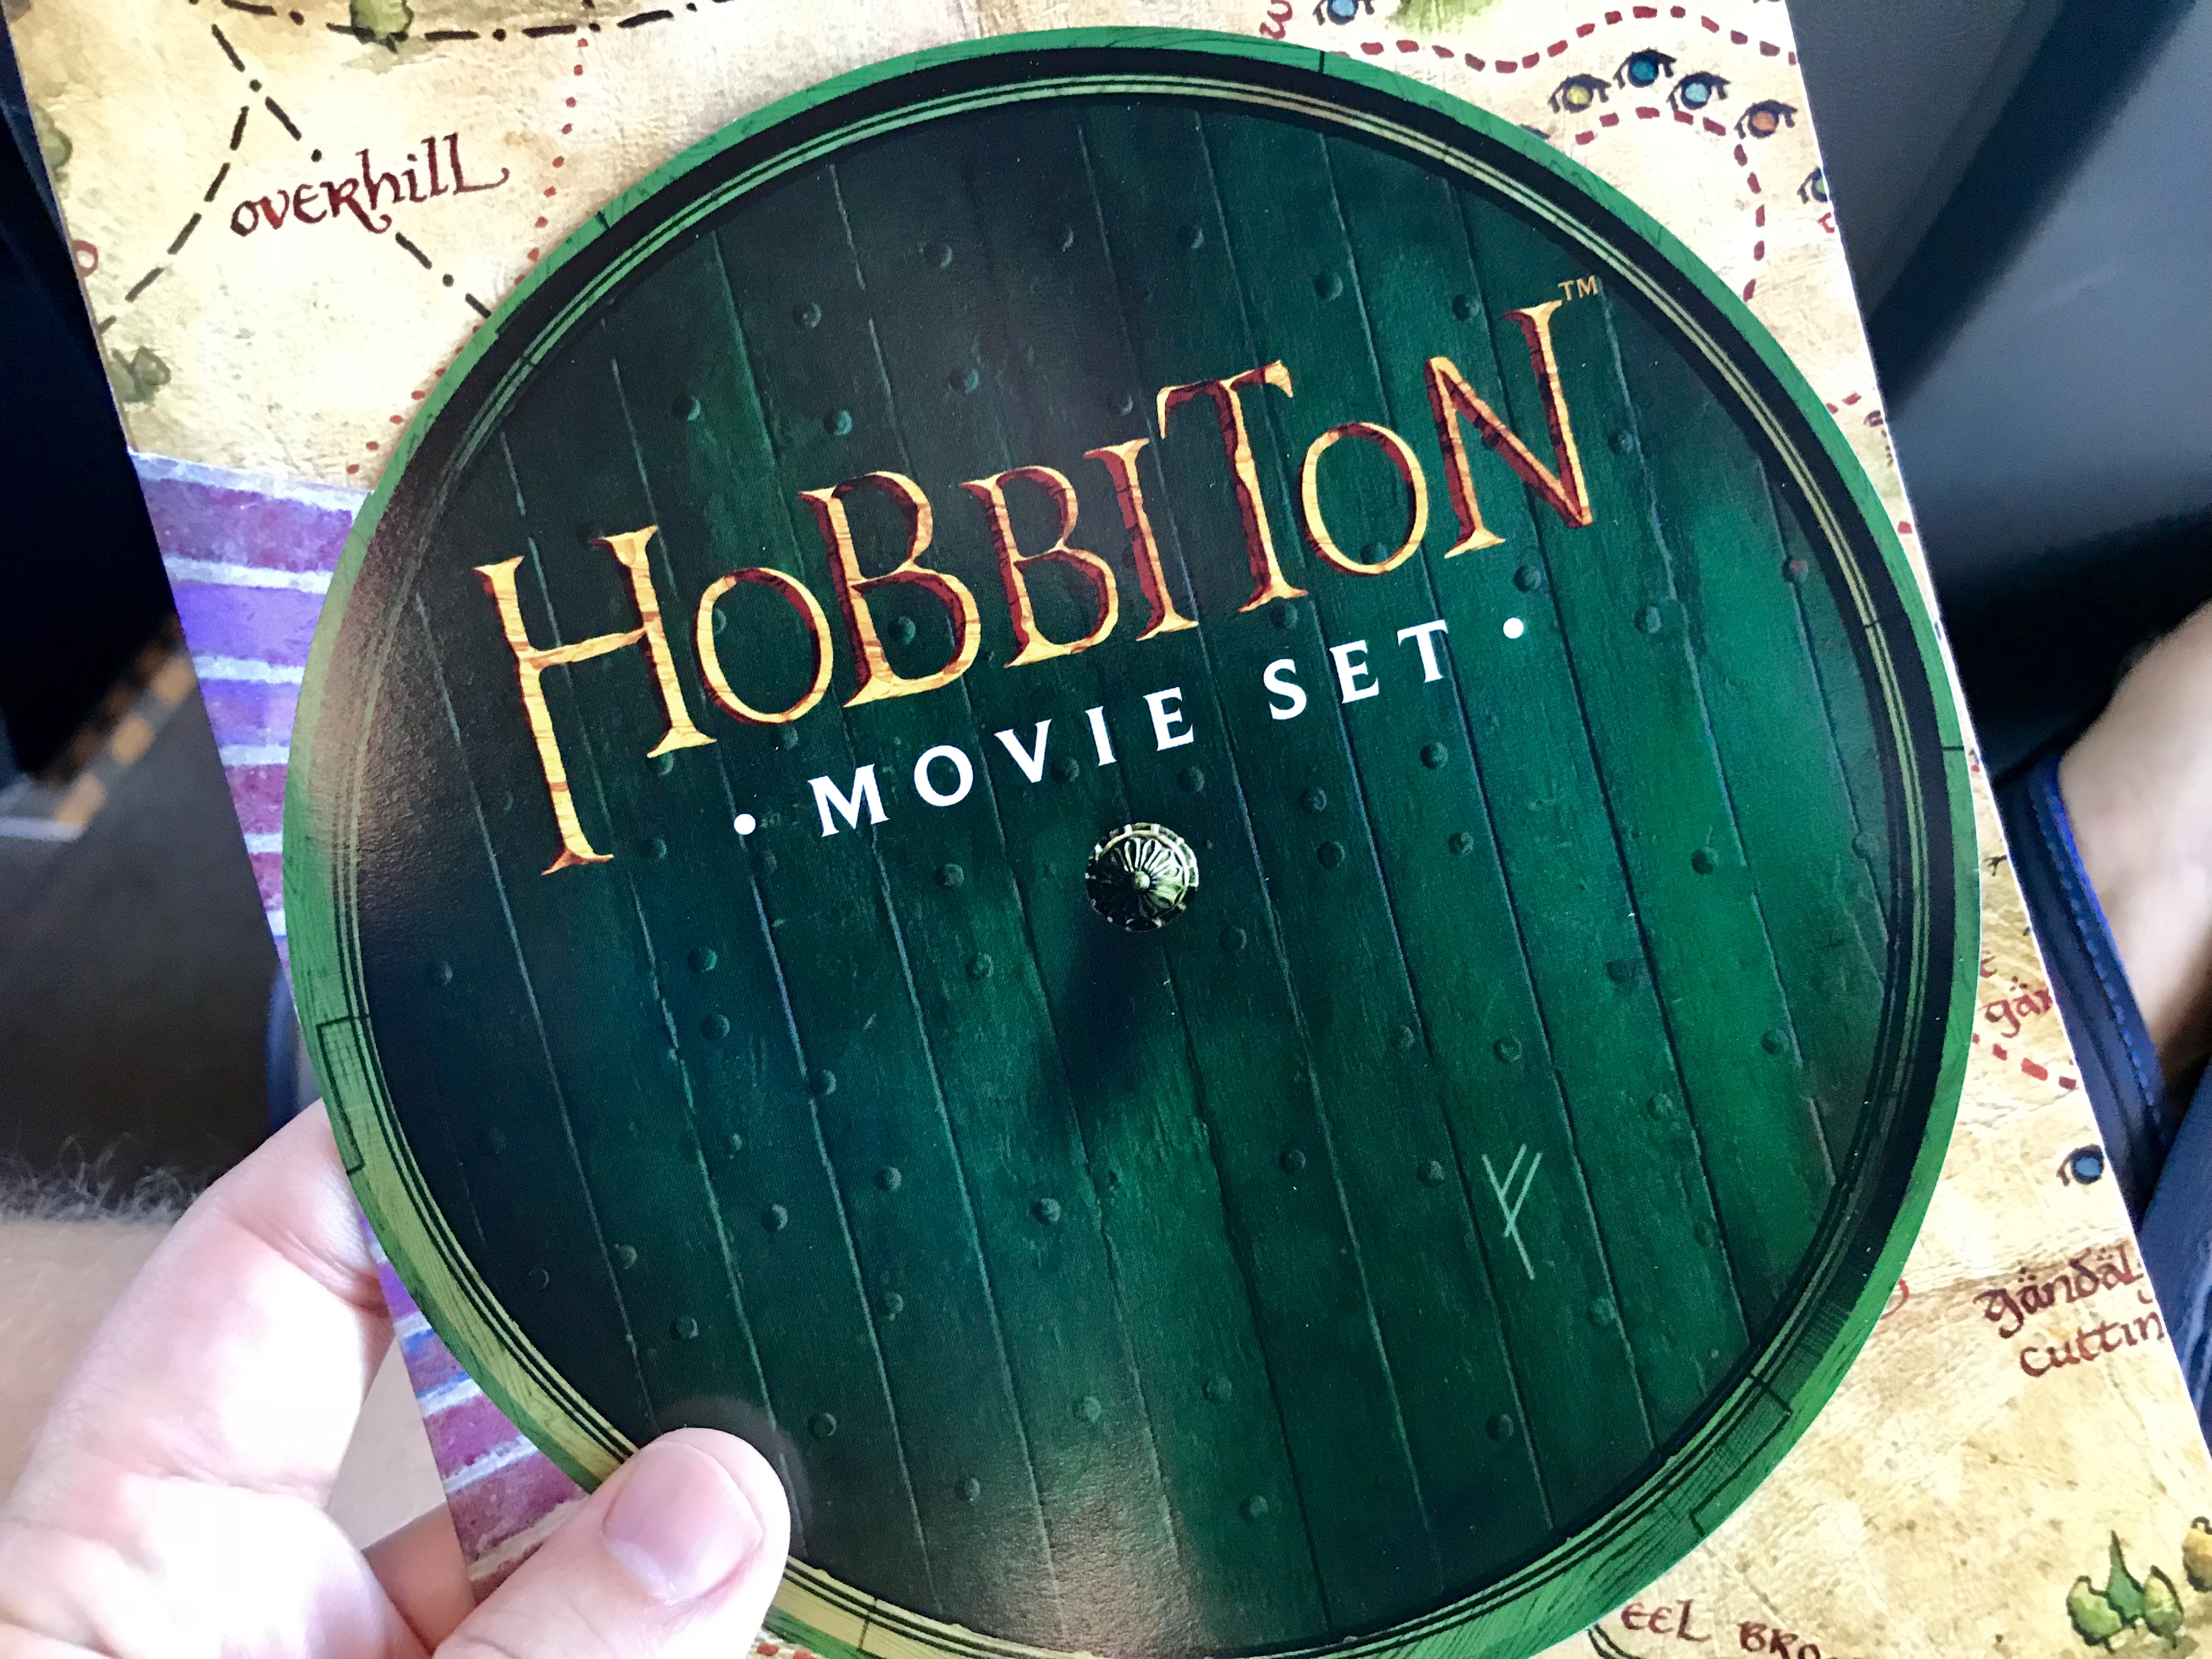 Hobbiton Movie Set tour in New Zealand